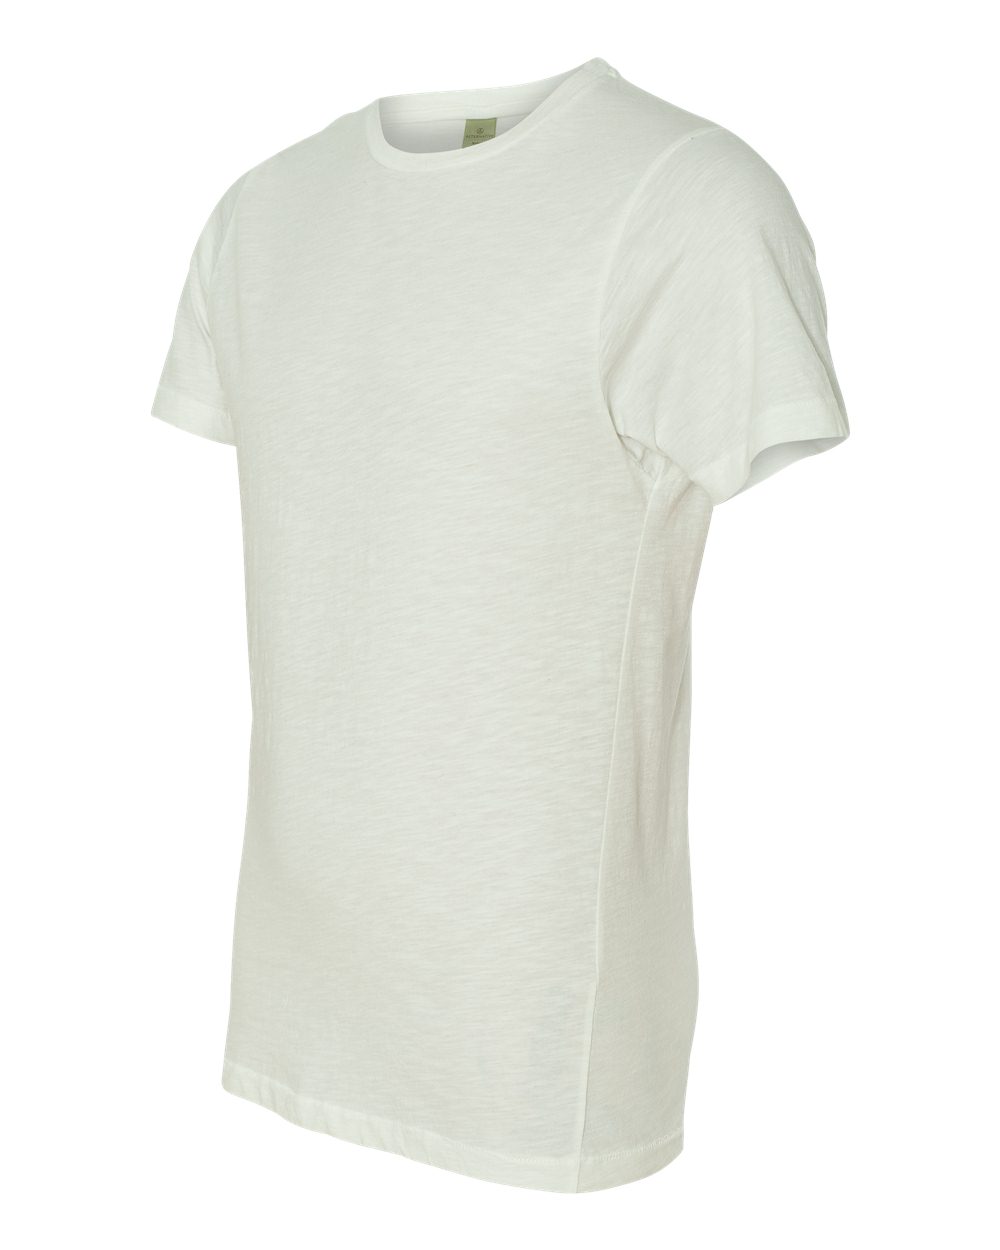 Alternative 4805 - The Dean Unisex Slub Crewneck T-Shirt $9.56